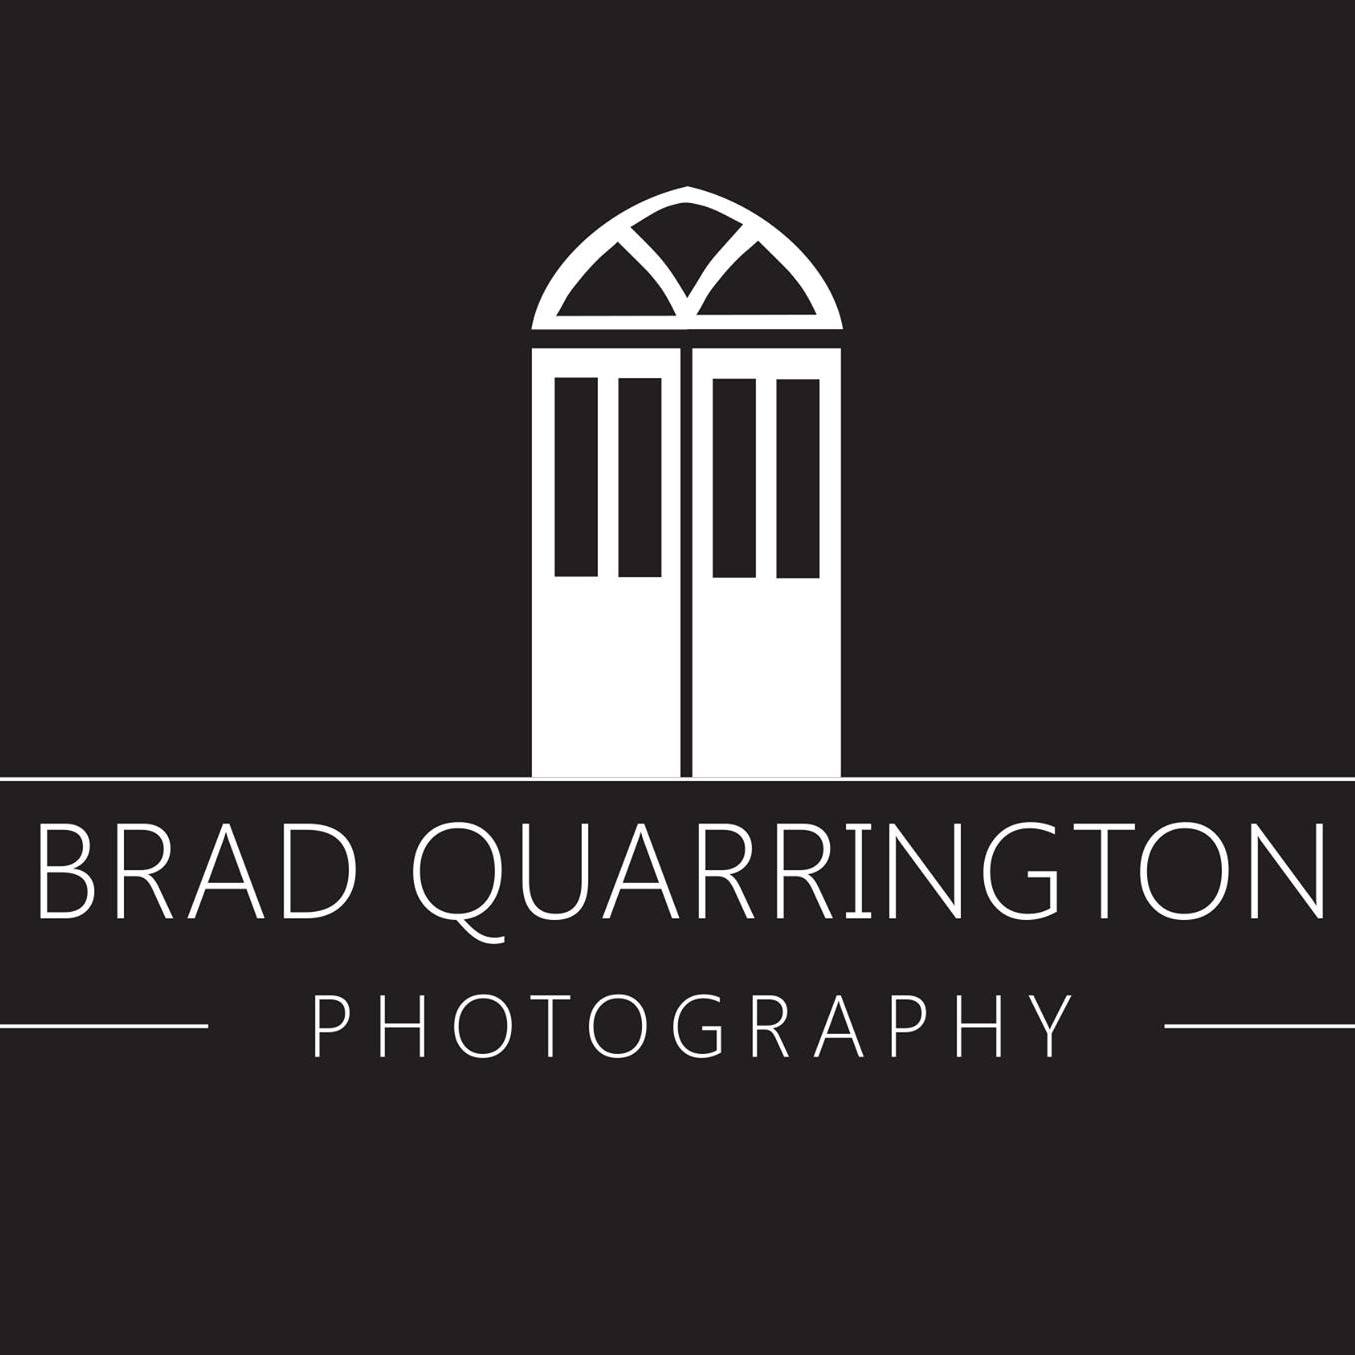 Brad quarrington